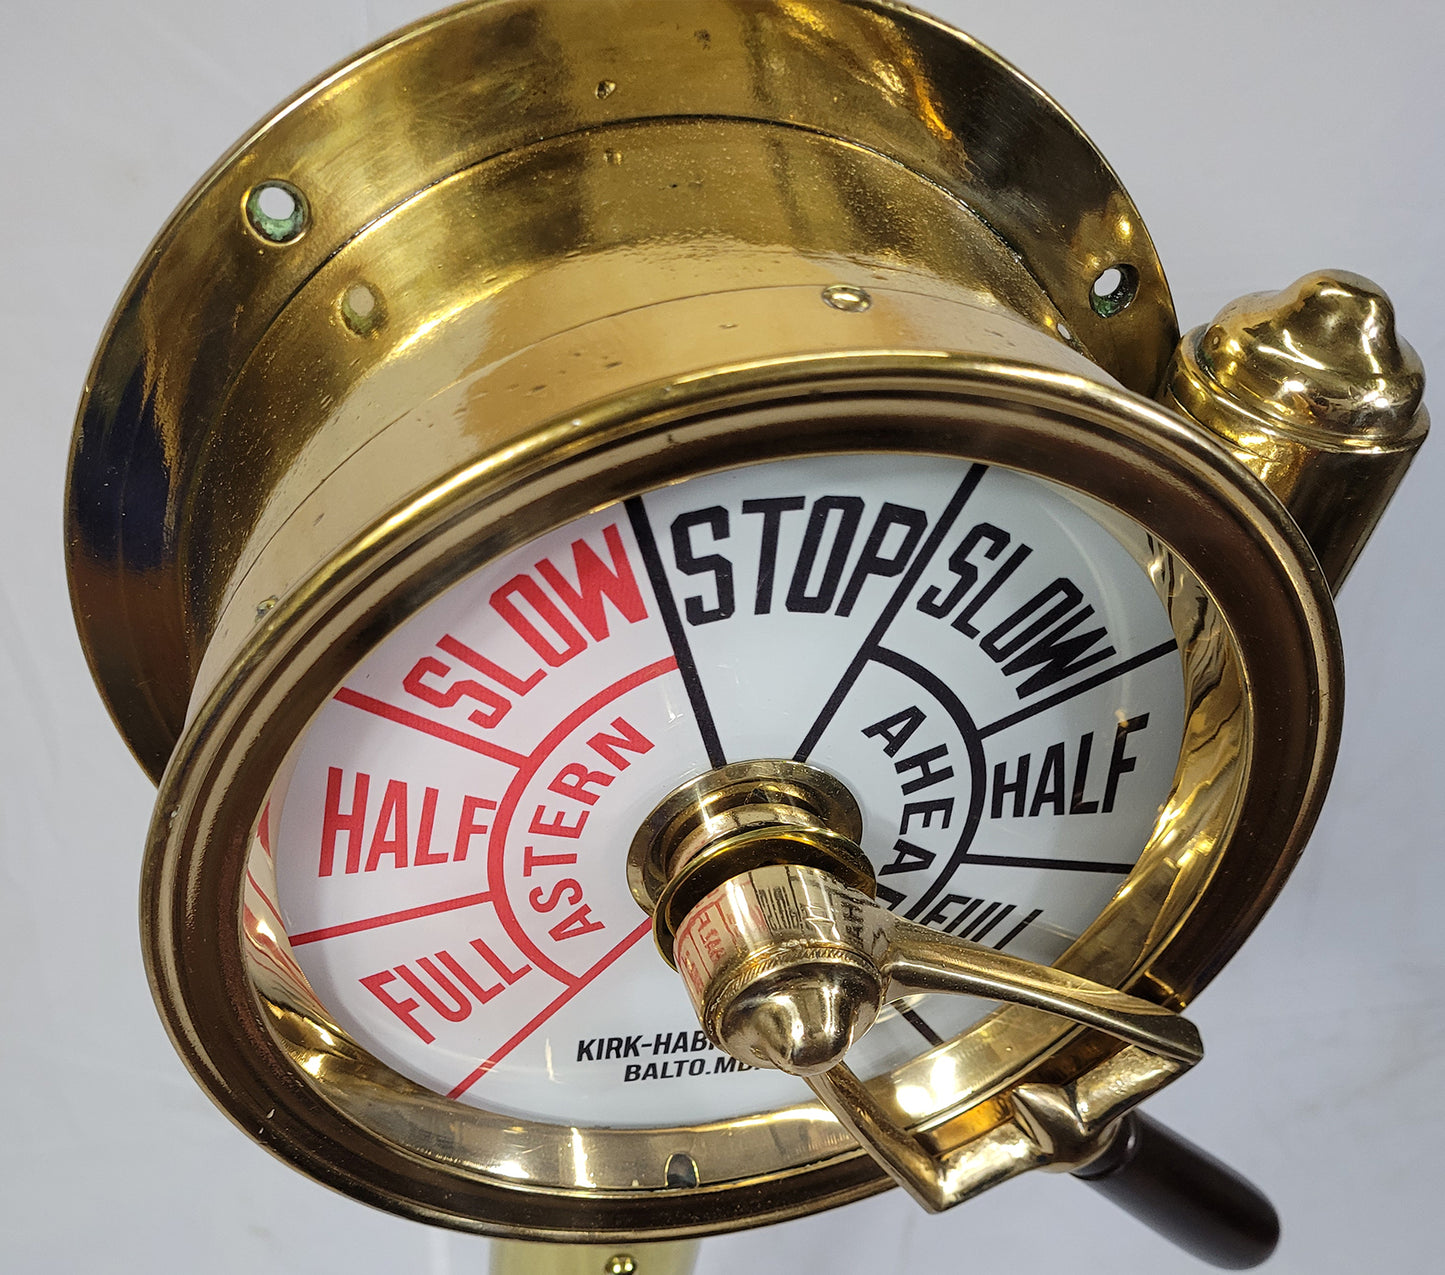 Solid Brass Ships Engine Order Telegraph - Lannan Gallery